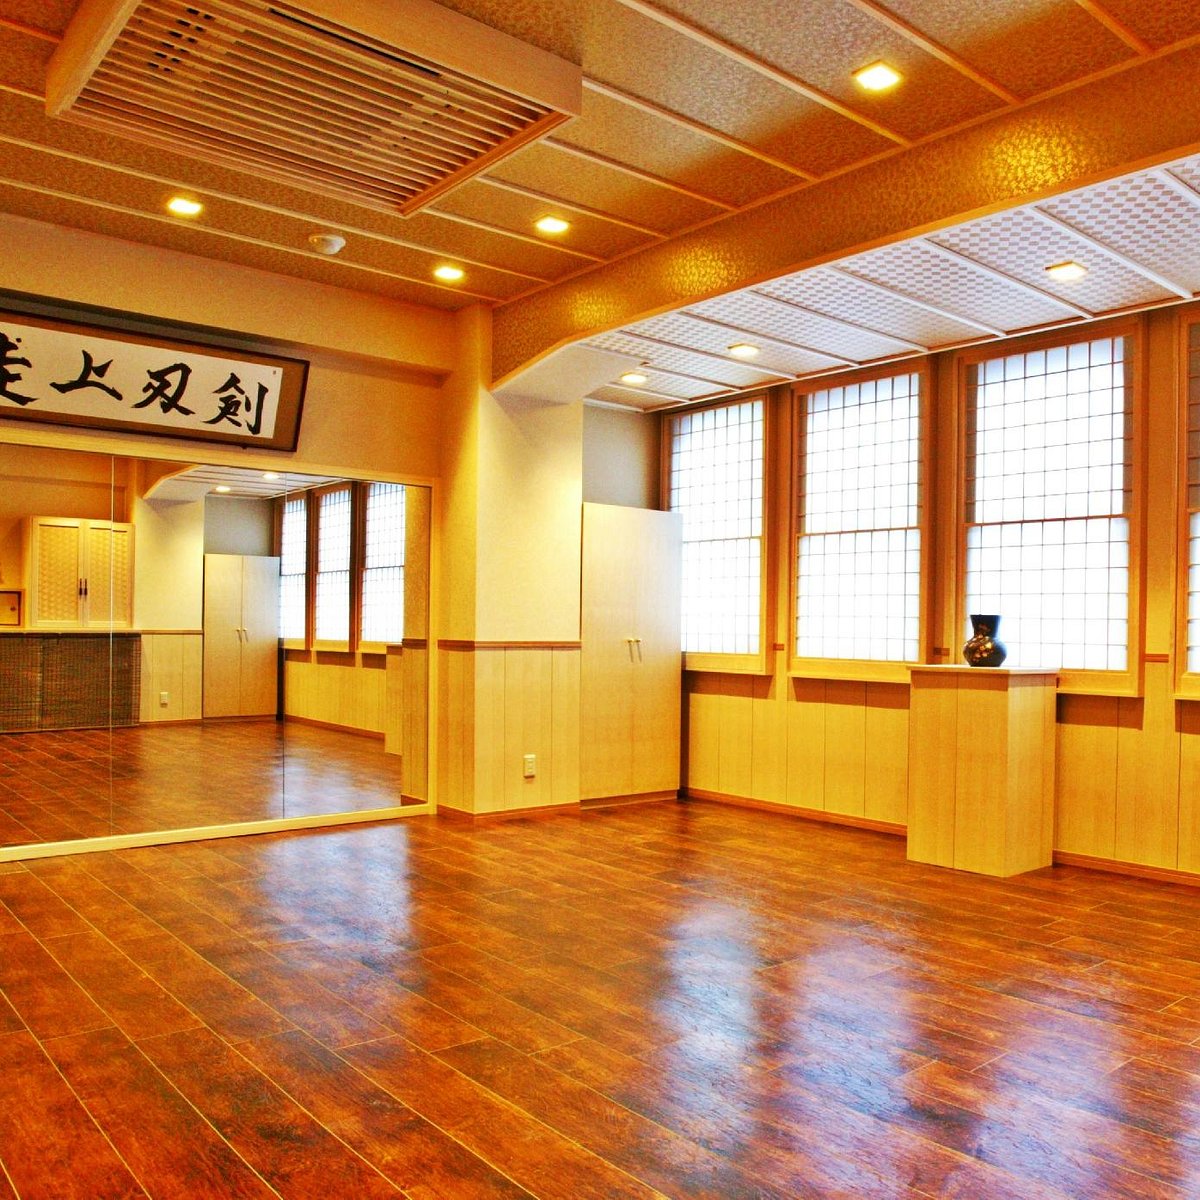 LE CAFE V, Ginza - Ginza / Tokyo Nihonbashi - Restaurant Reviews, Photos &  Phone Number - Tripadvisor